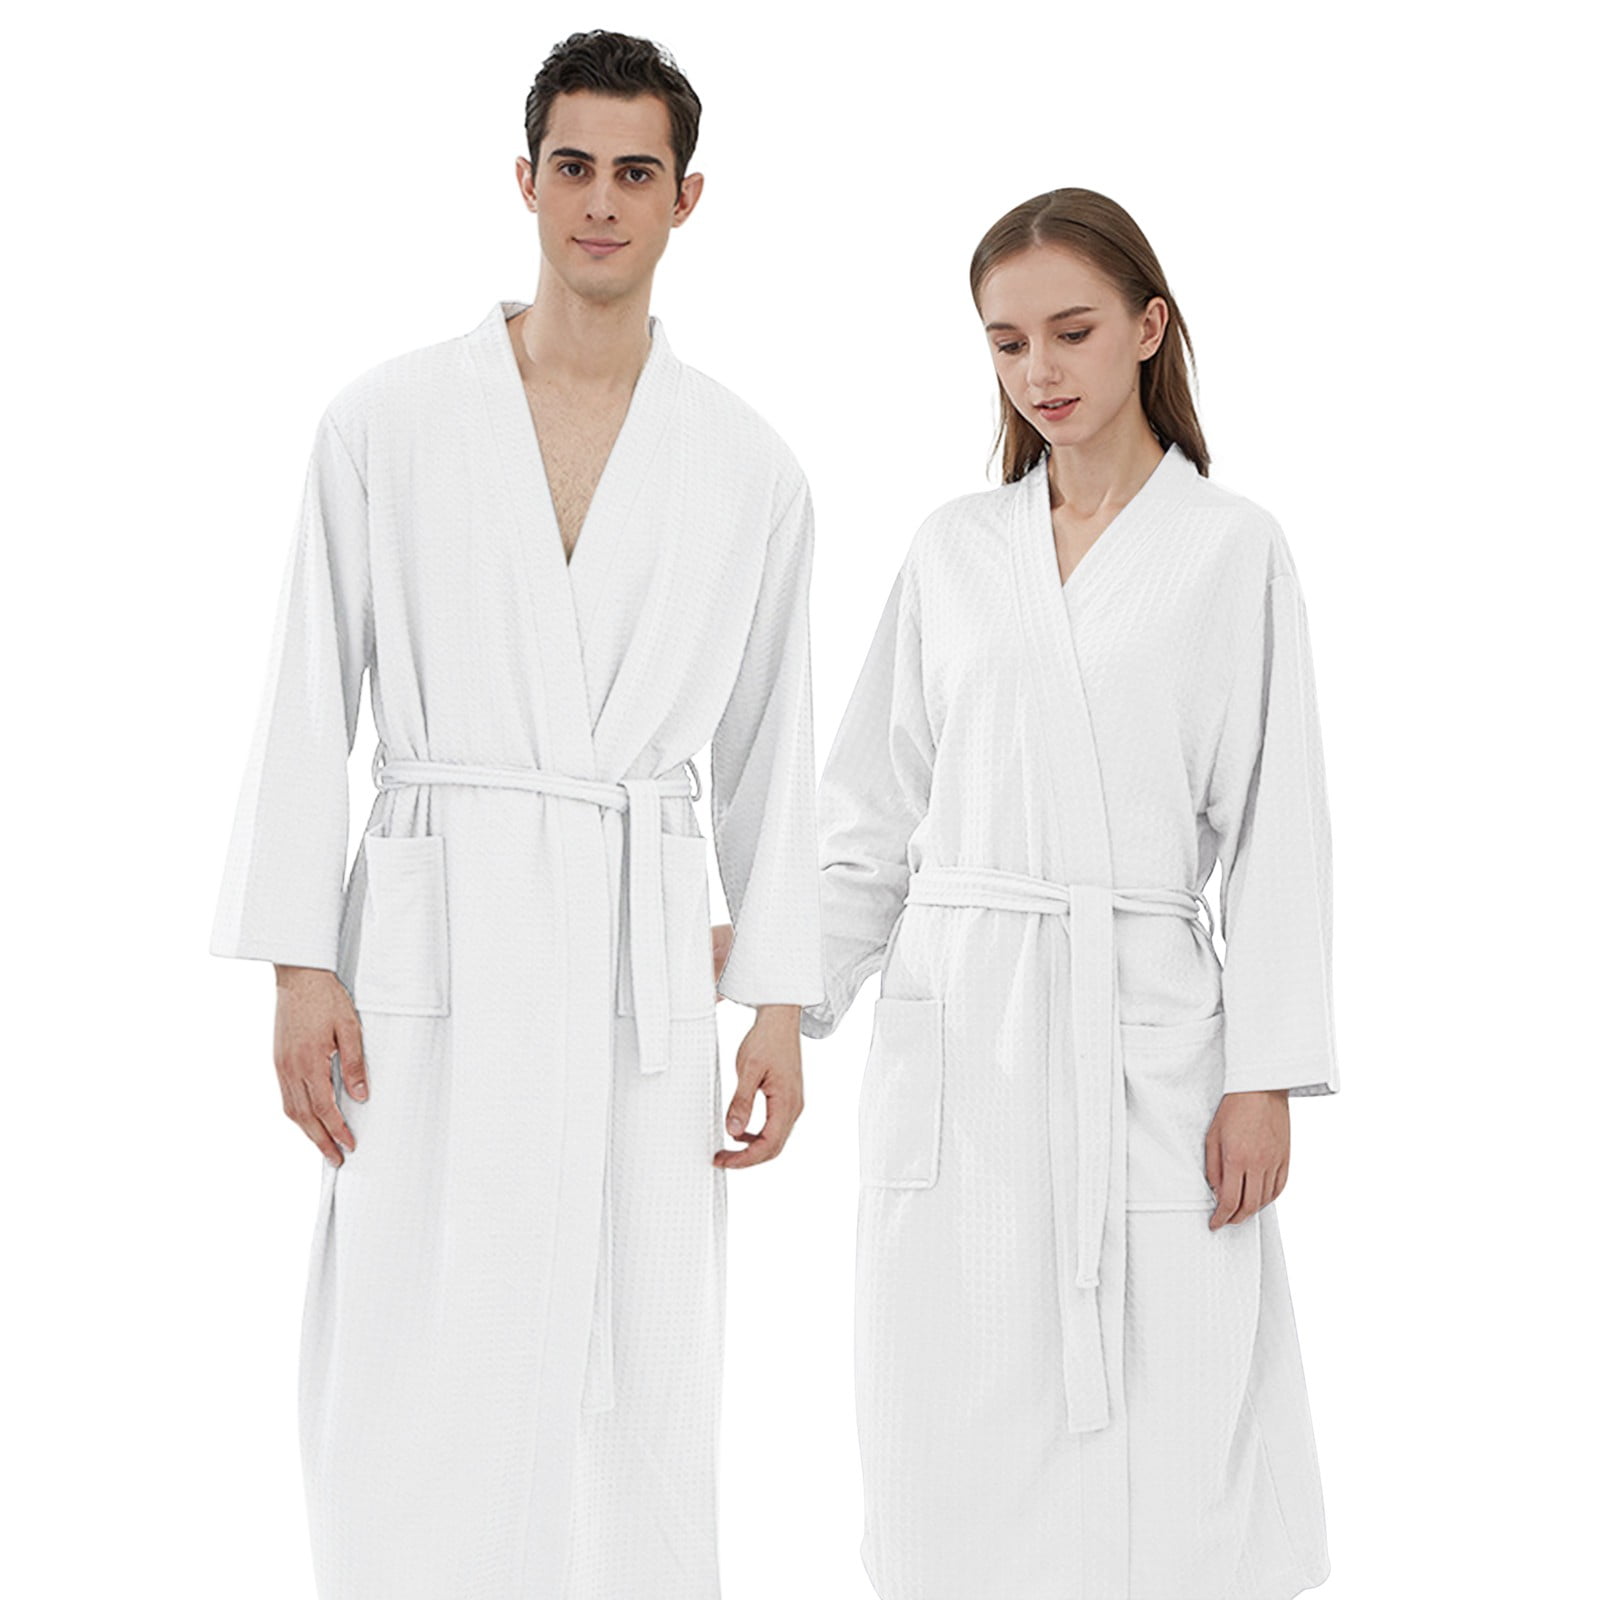 xiuh sleepwear for women ladies men couple cloth robe sleepwear white ...